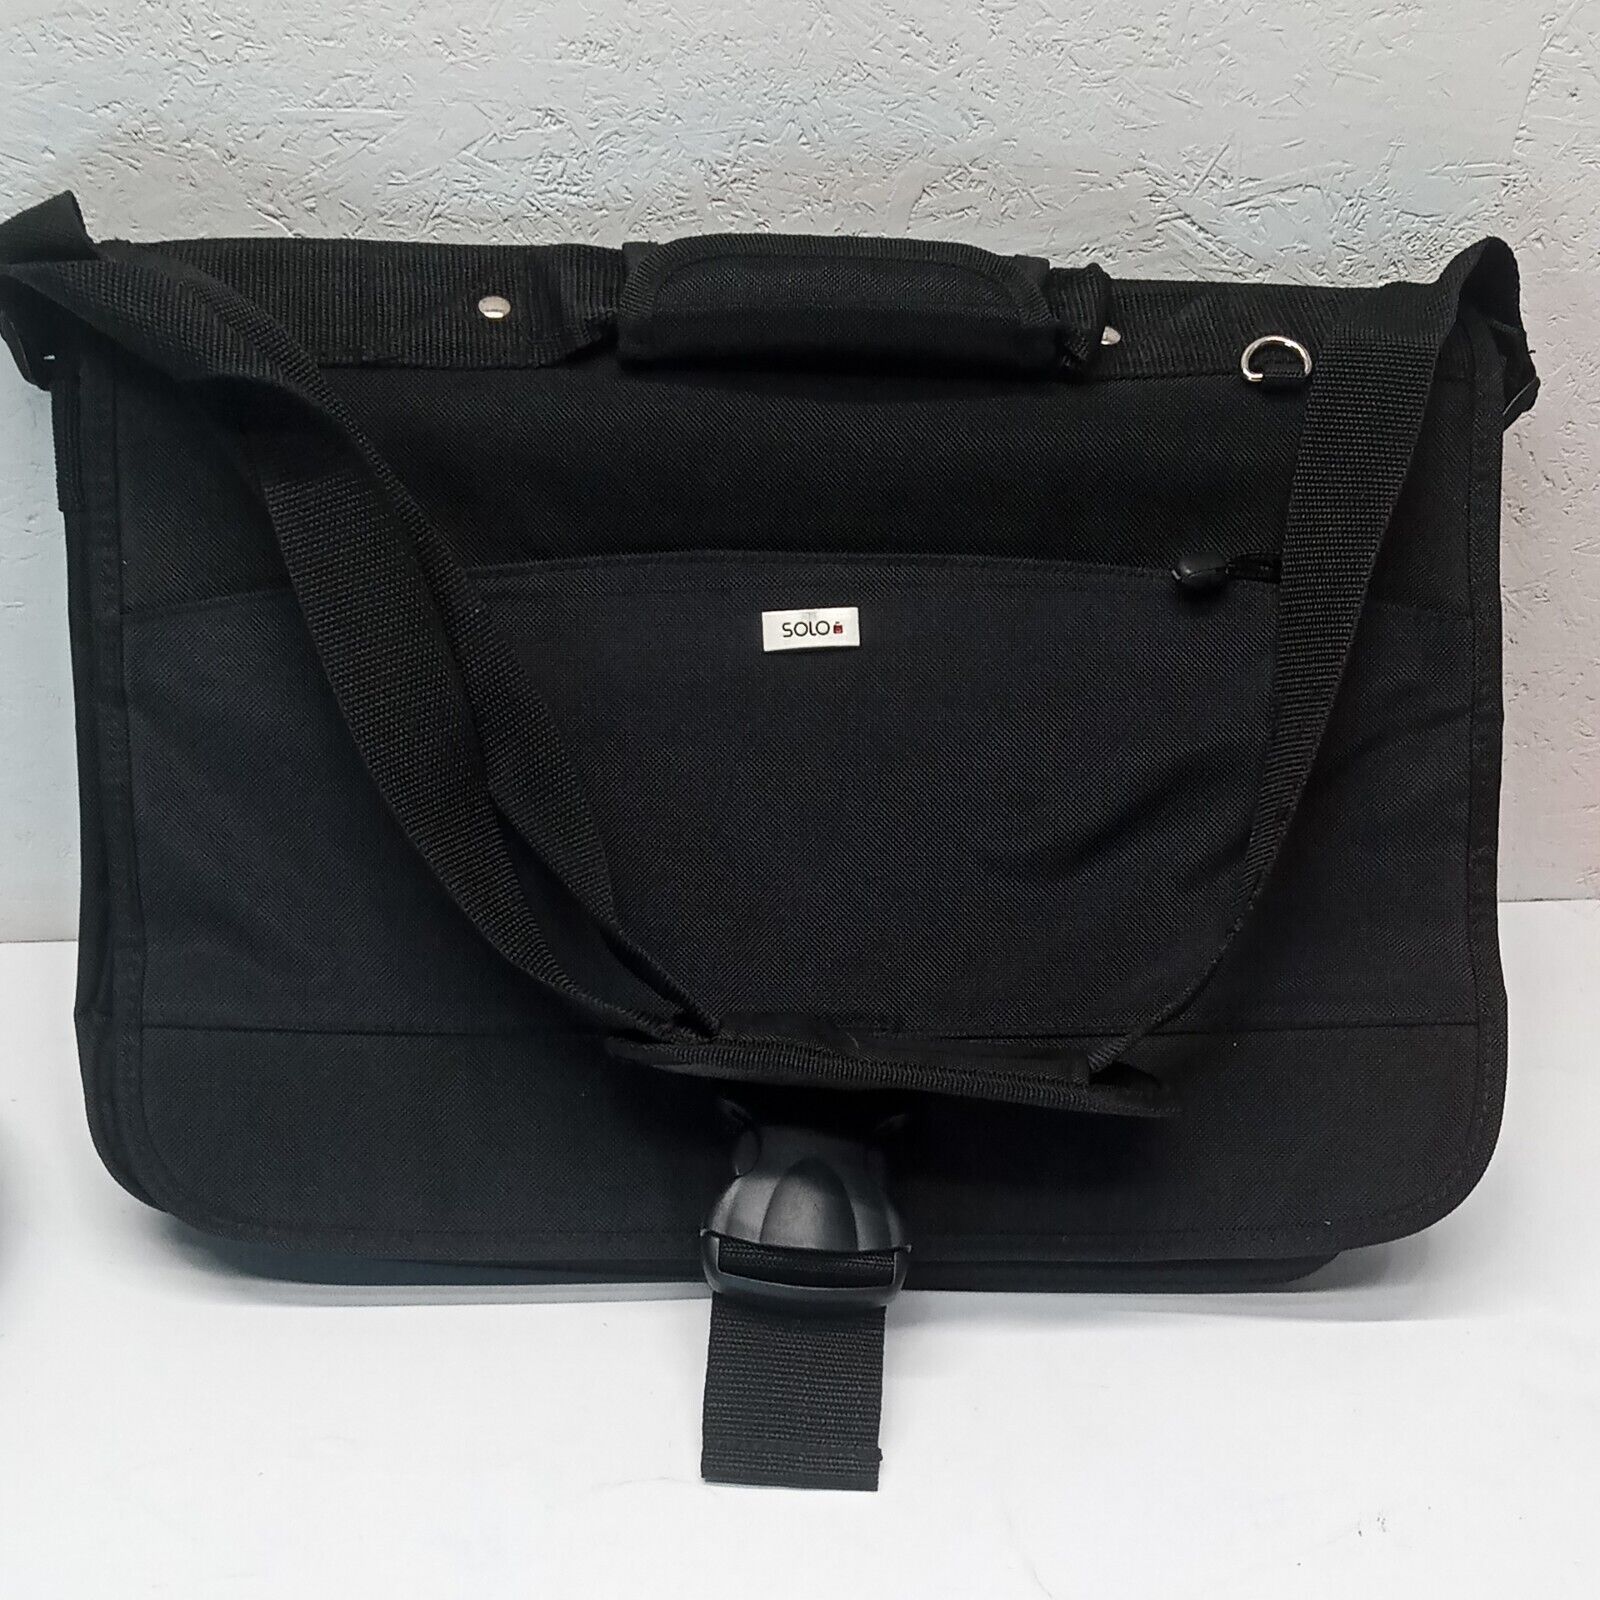  SOLO Laptop Messengar Bag Black Nylon w Padded Sleeve multiple pockets NY-10